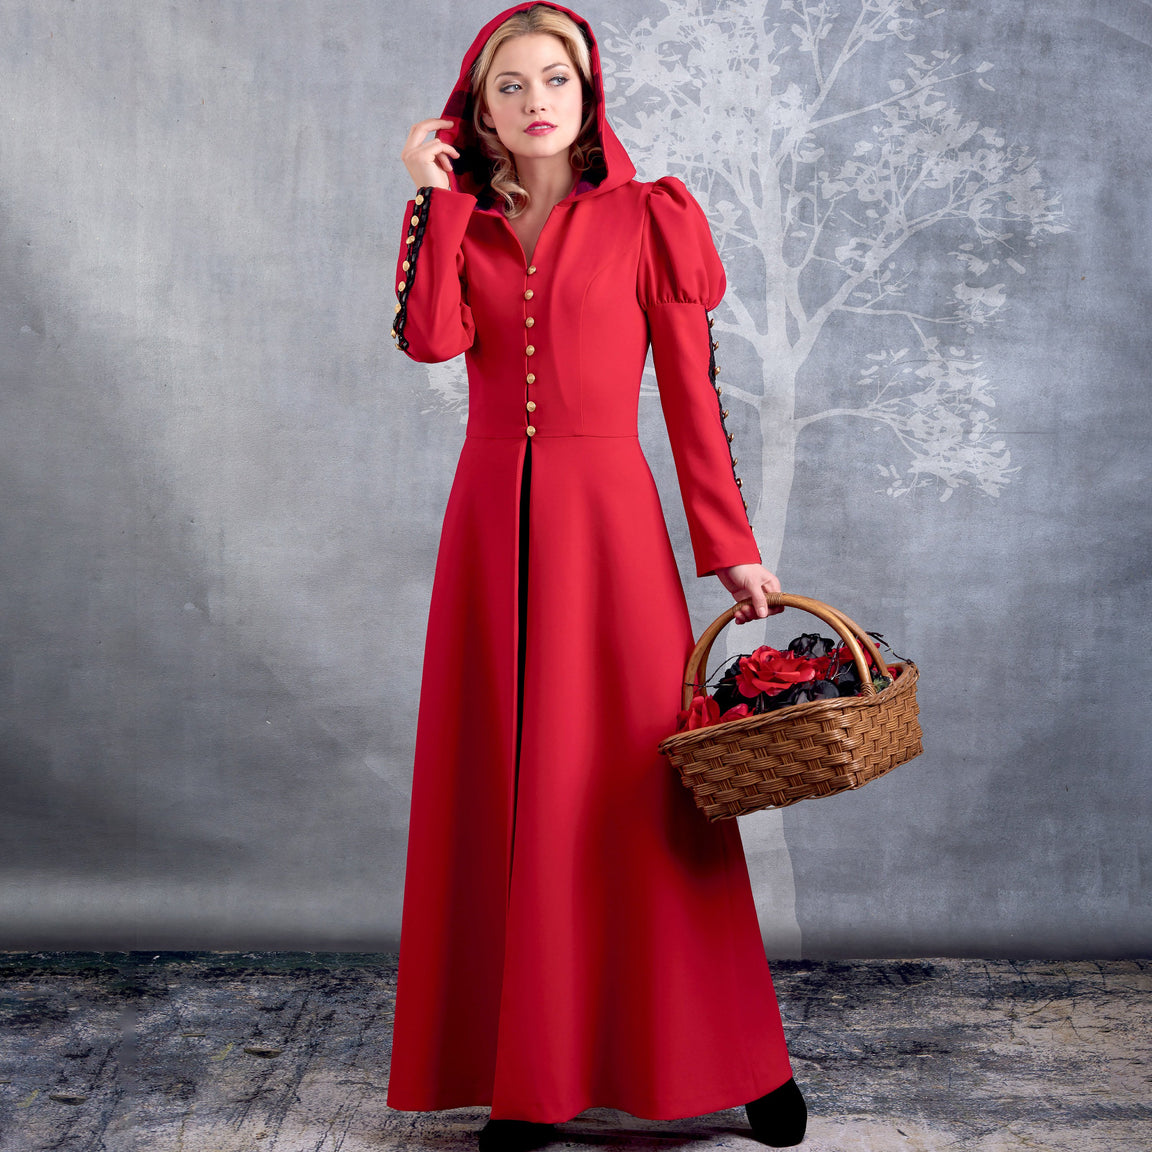 Sewing Patterns | Costumes & Uniforms | Fancy Dress — Page 5 — jaycotts ...